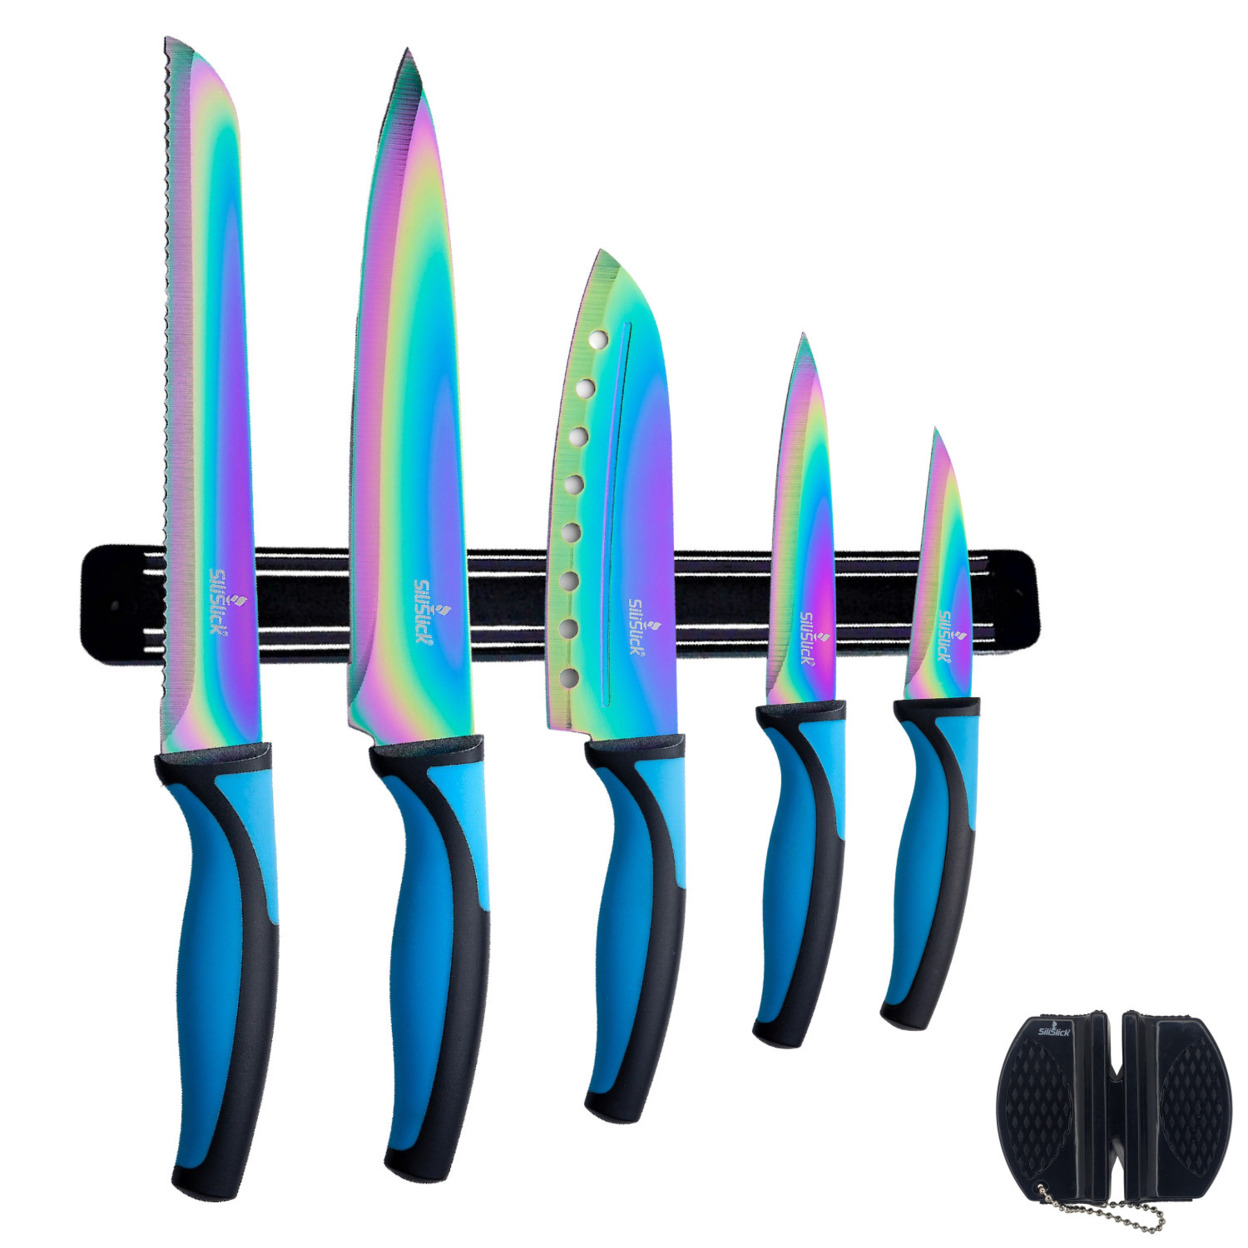 SiliSlick Stainless Steel Blue Handle Knife Set - Titanium Coated Utility Knife, Santoku, Bread, Chef, & Paring + Sharpener & Mounting Rack